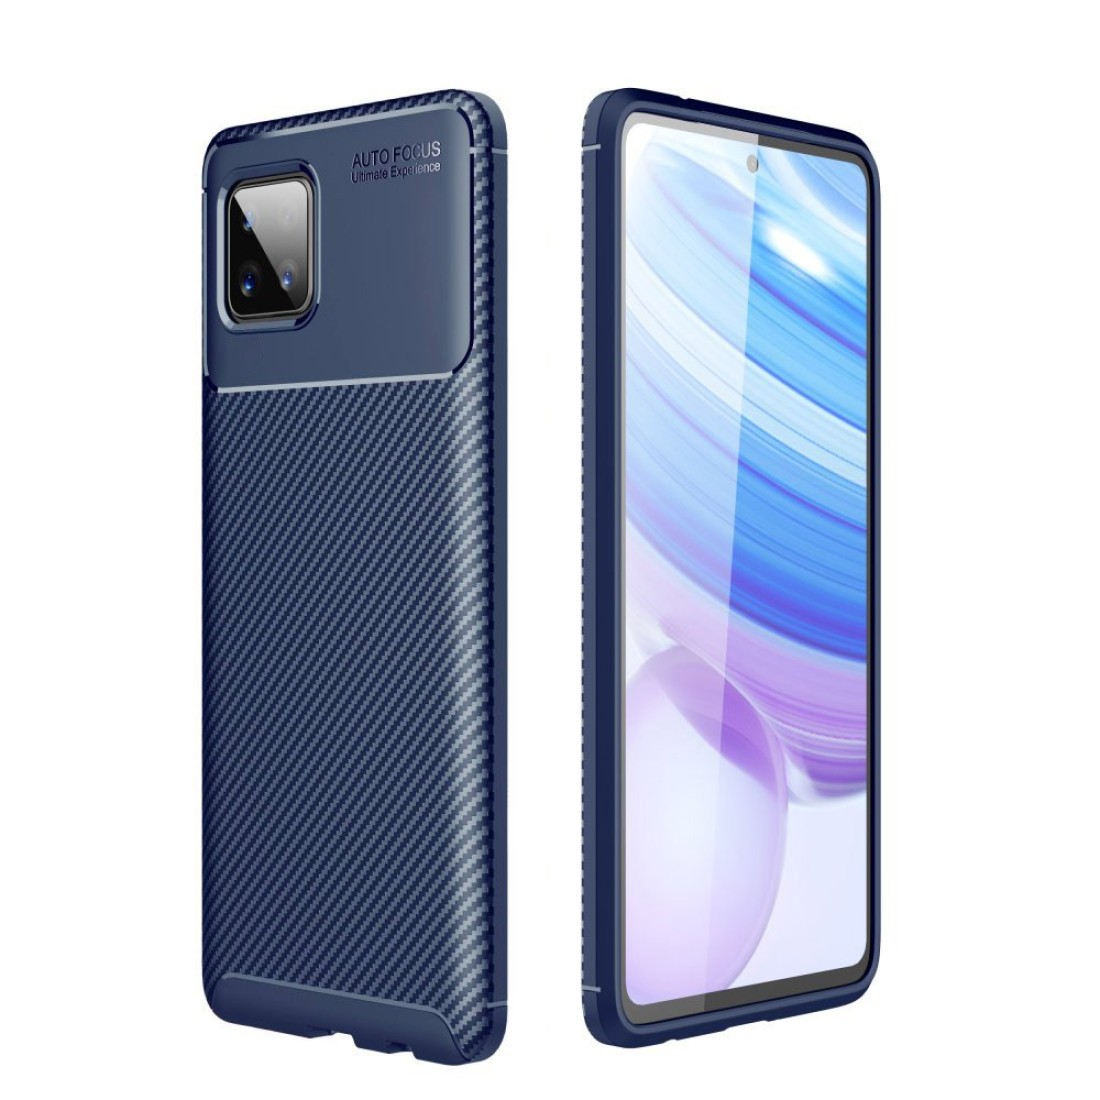 Samsung Galaxy A81 / Note 10 Lite Kılıf Focus Karbon Silikon - Lacivert